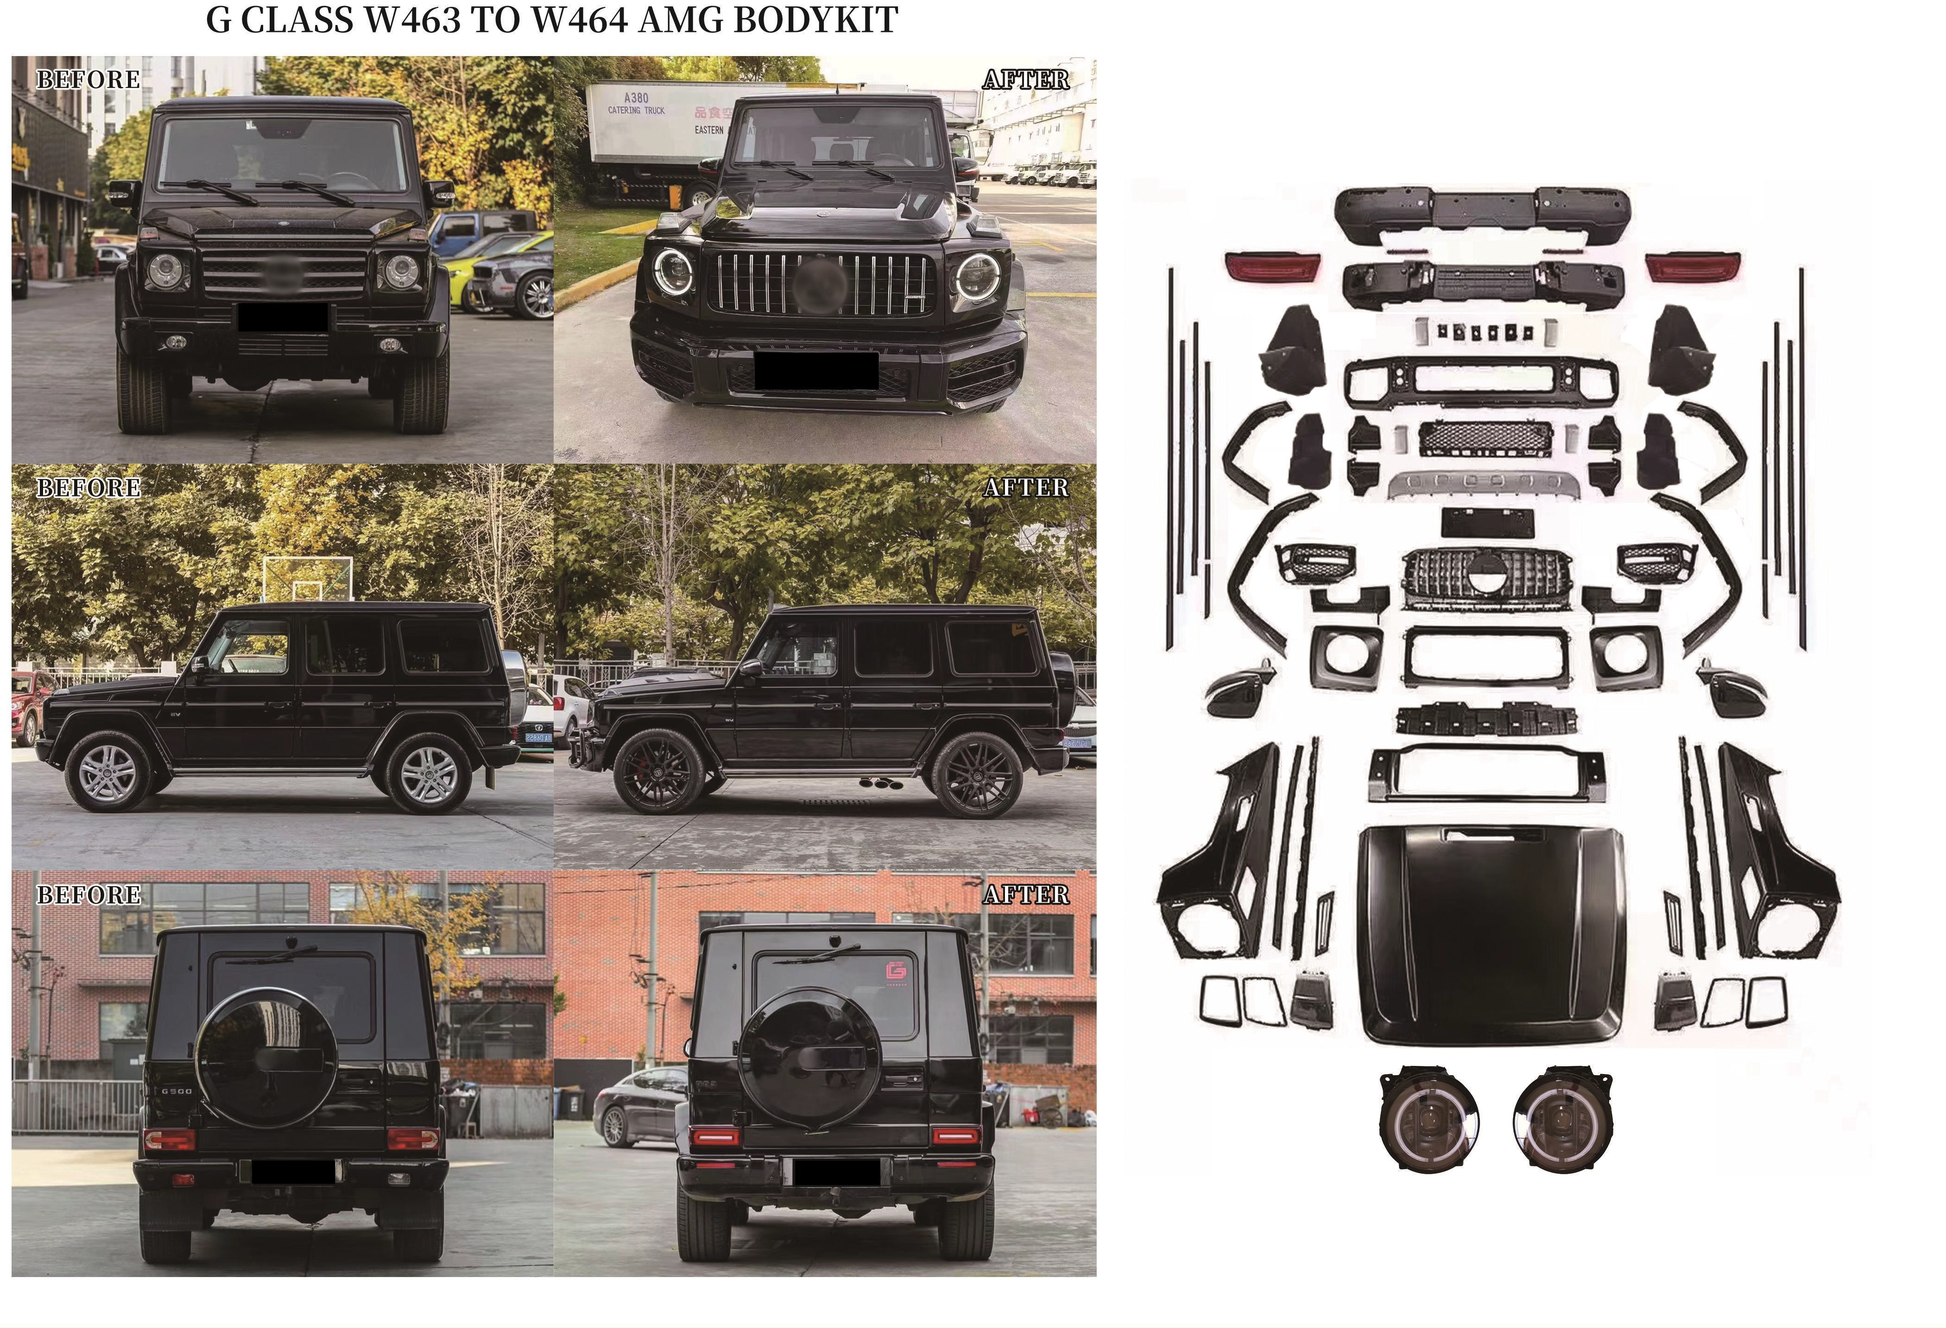 Mercedes G Class W463 to W464 Body Kit Conversion – BGL Body Kits